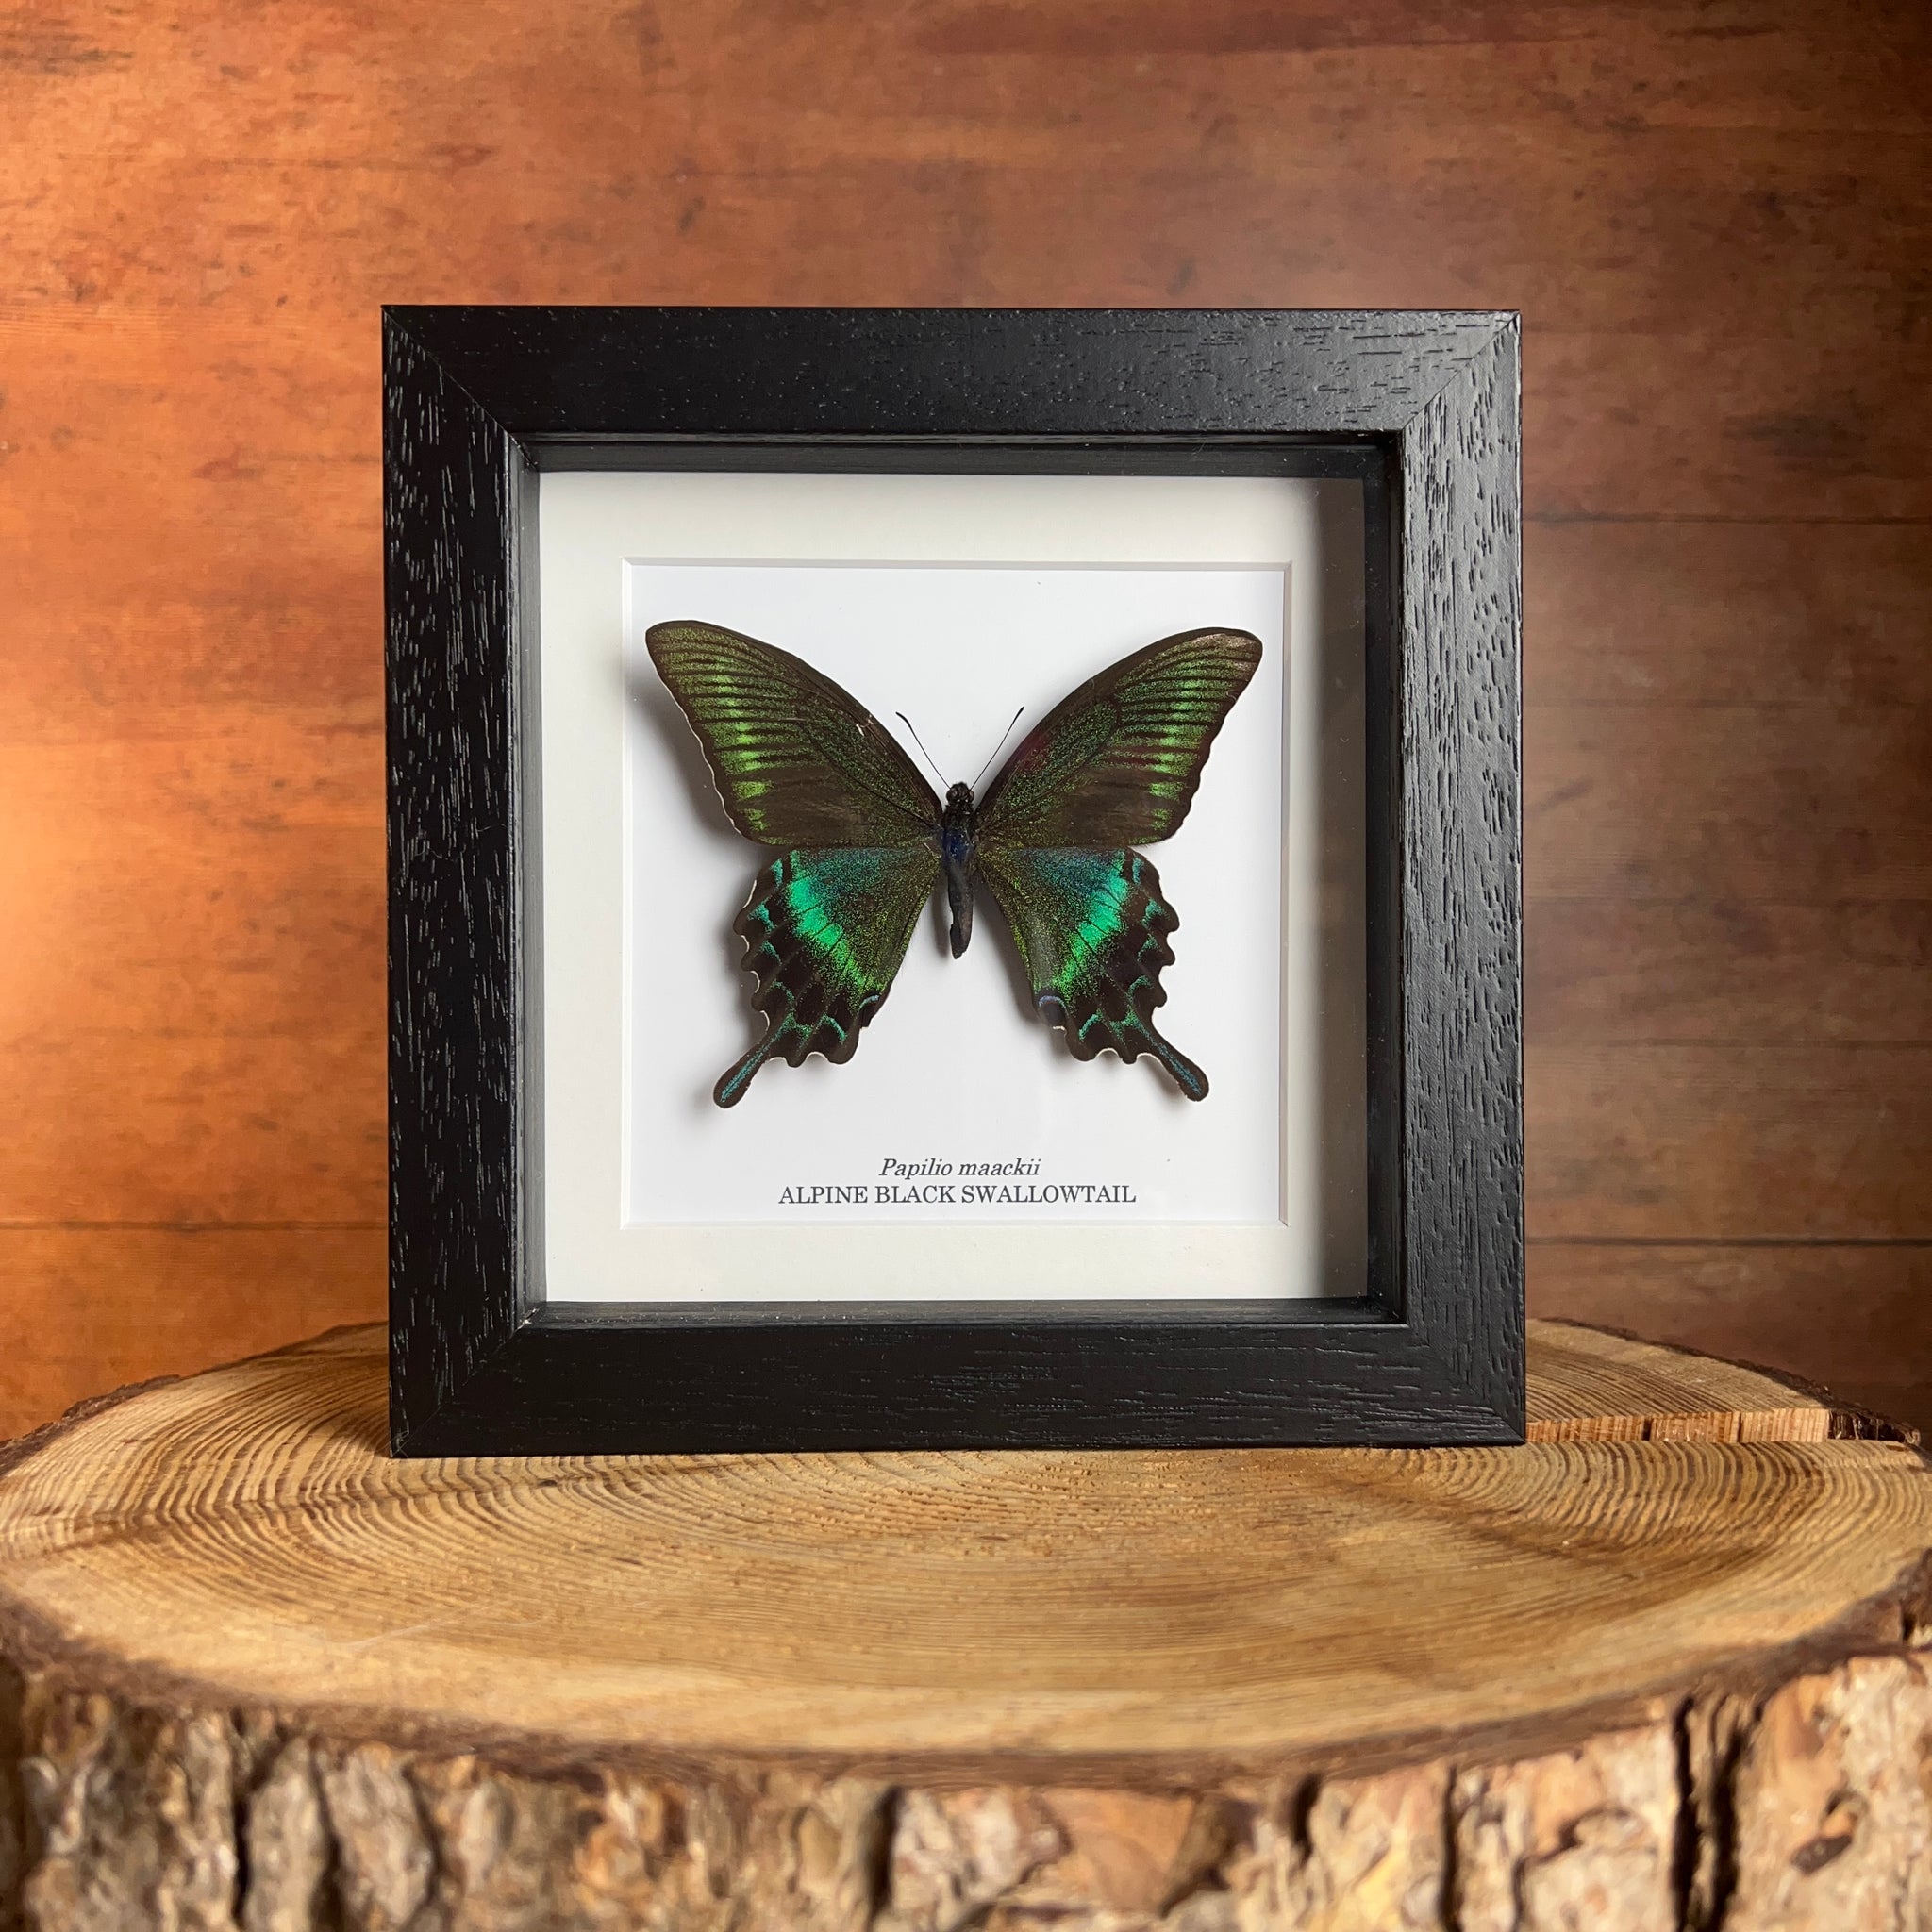 Alpine Black Swallowtail - Papilio maackii